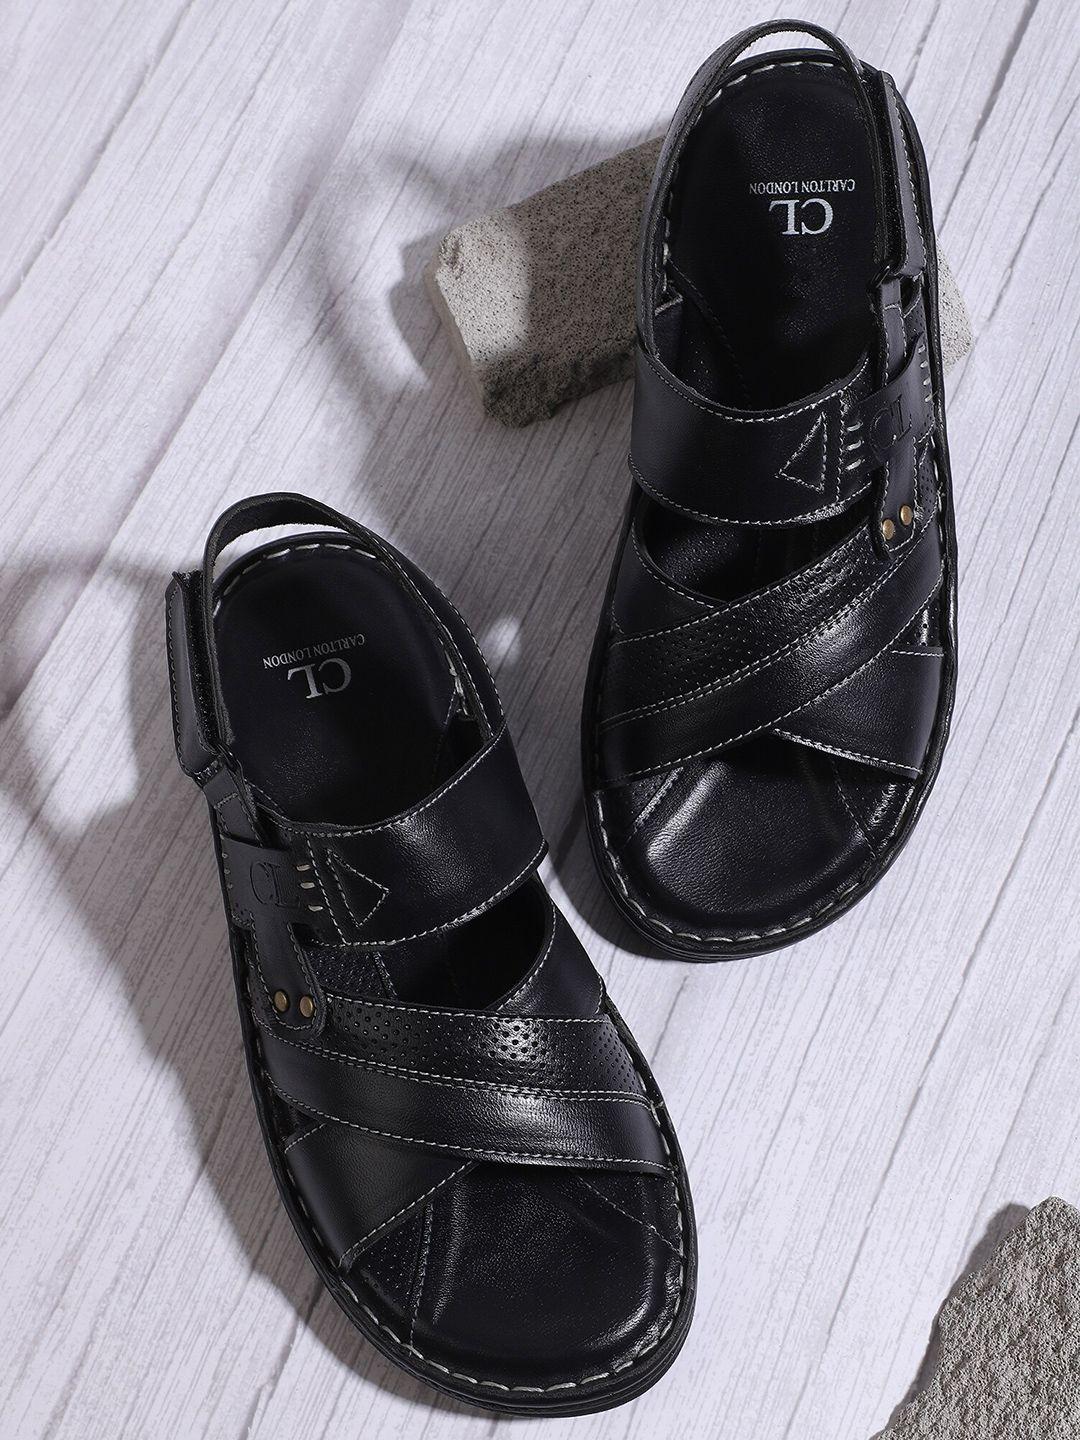 carlton-london-men-black-comfort-sandals